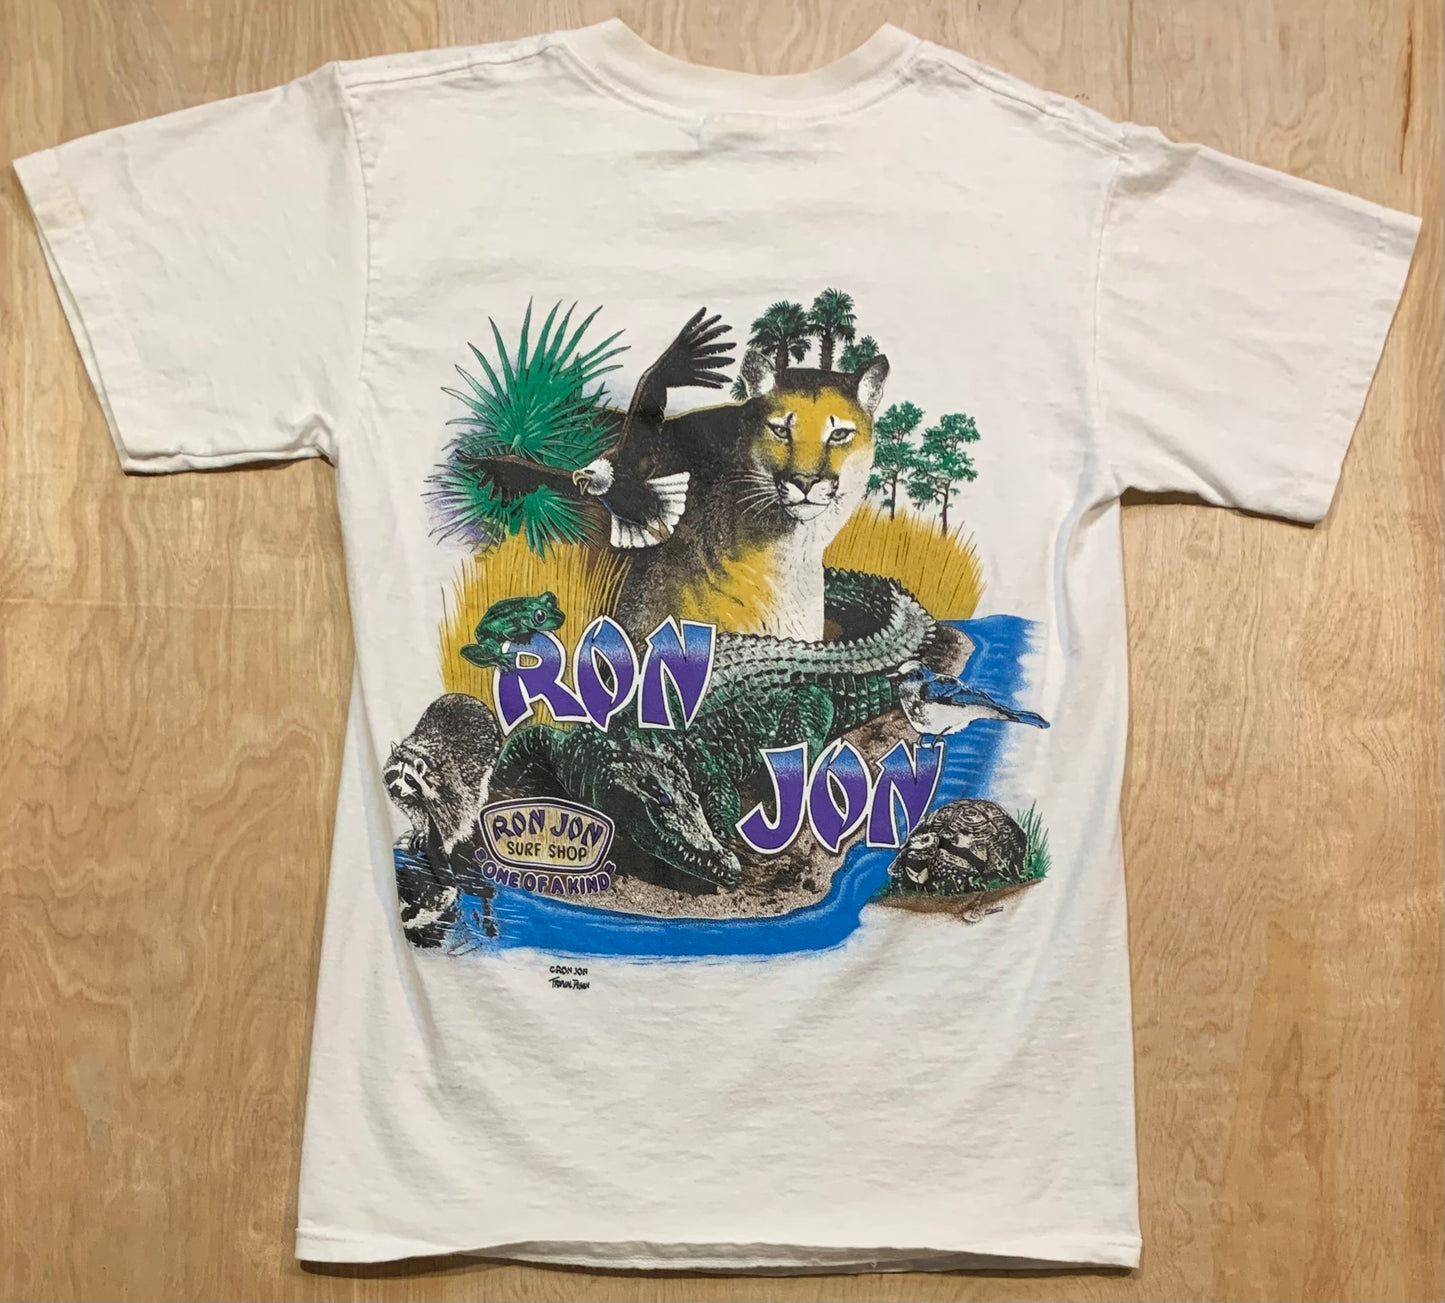 Vintage Ron Jon "St Johns River Celebration" Special Edition T-Shirt